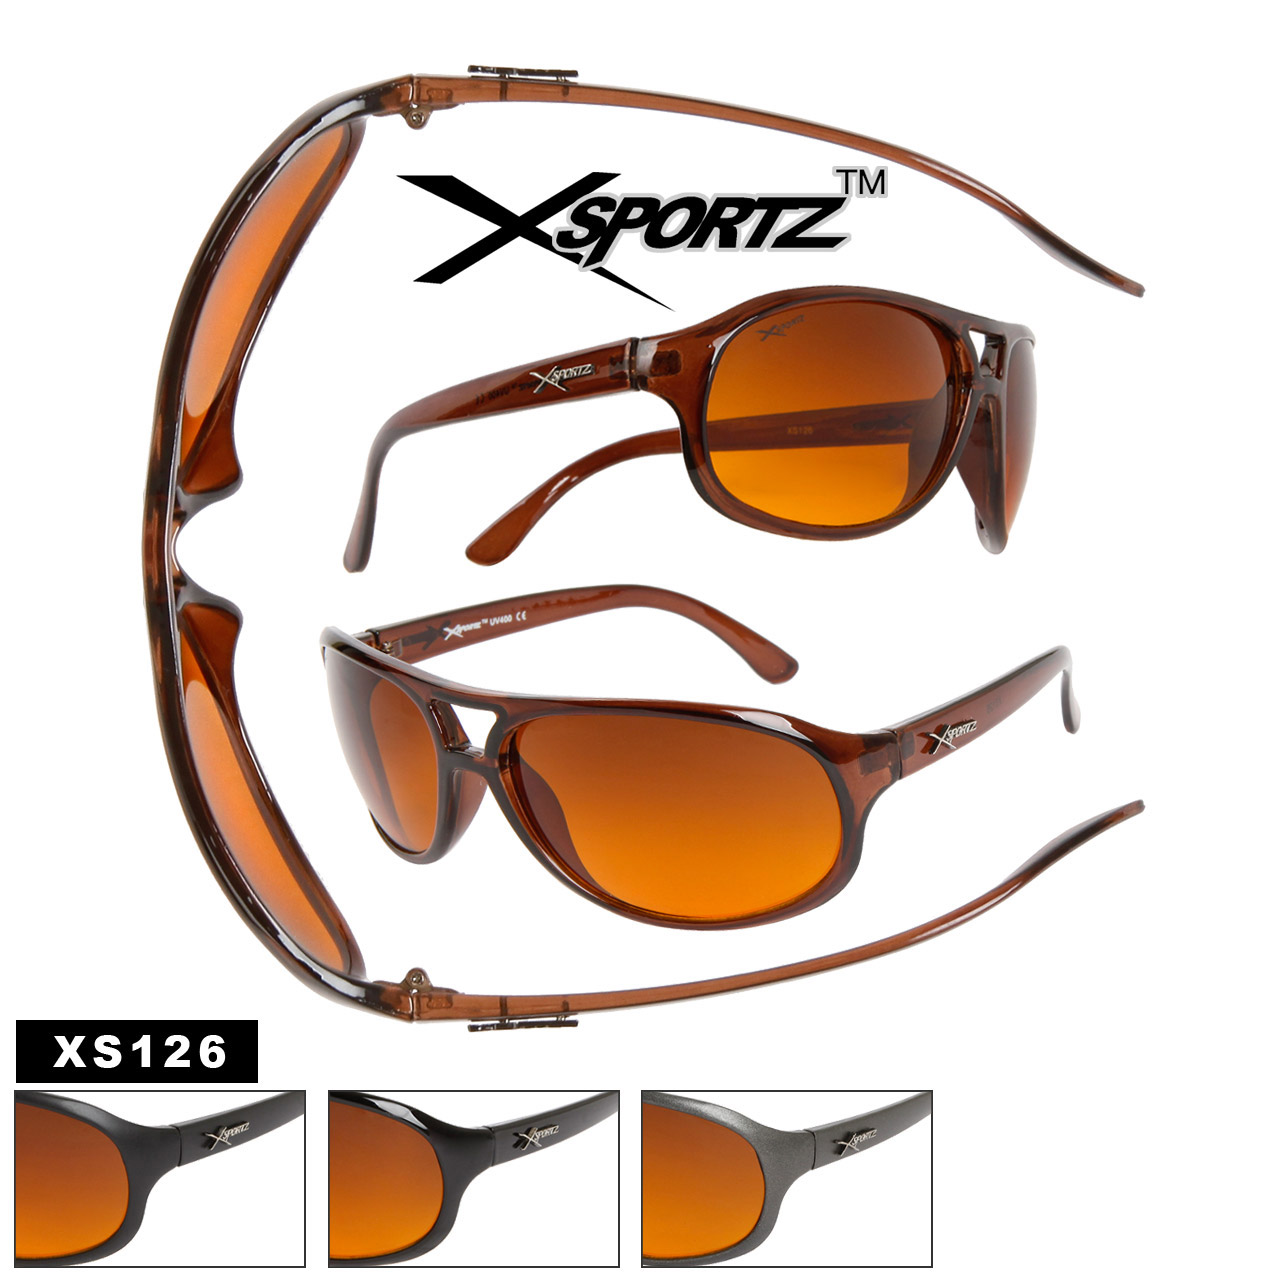 Xsportz™ Sunglasses XS126  Blocks Blue Light!  (Assorted Colors) (12 pcs.)